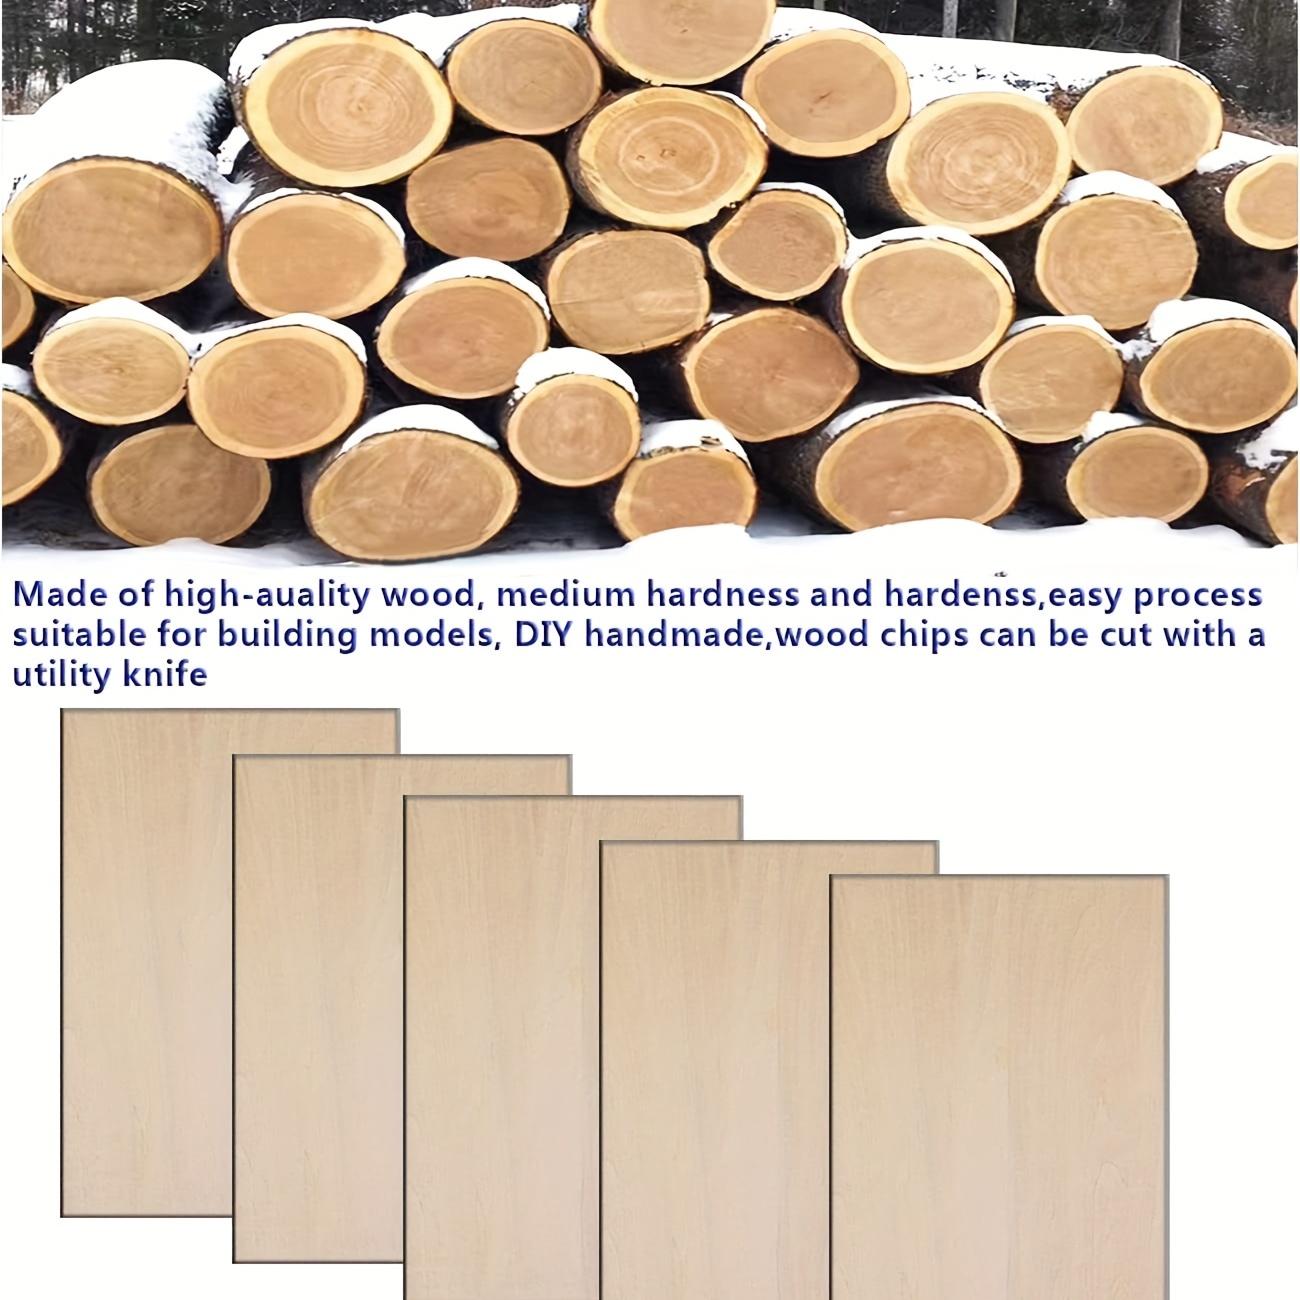 Basswood Sheets Thin Wood Sheets Plywood Board Basswood - Temu